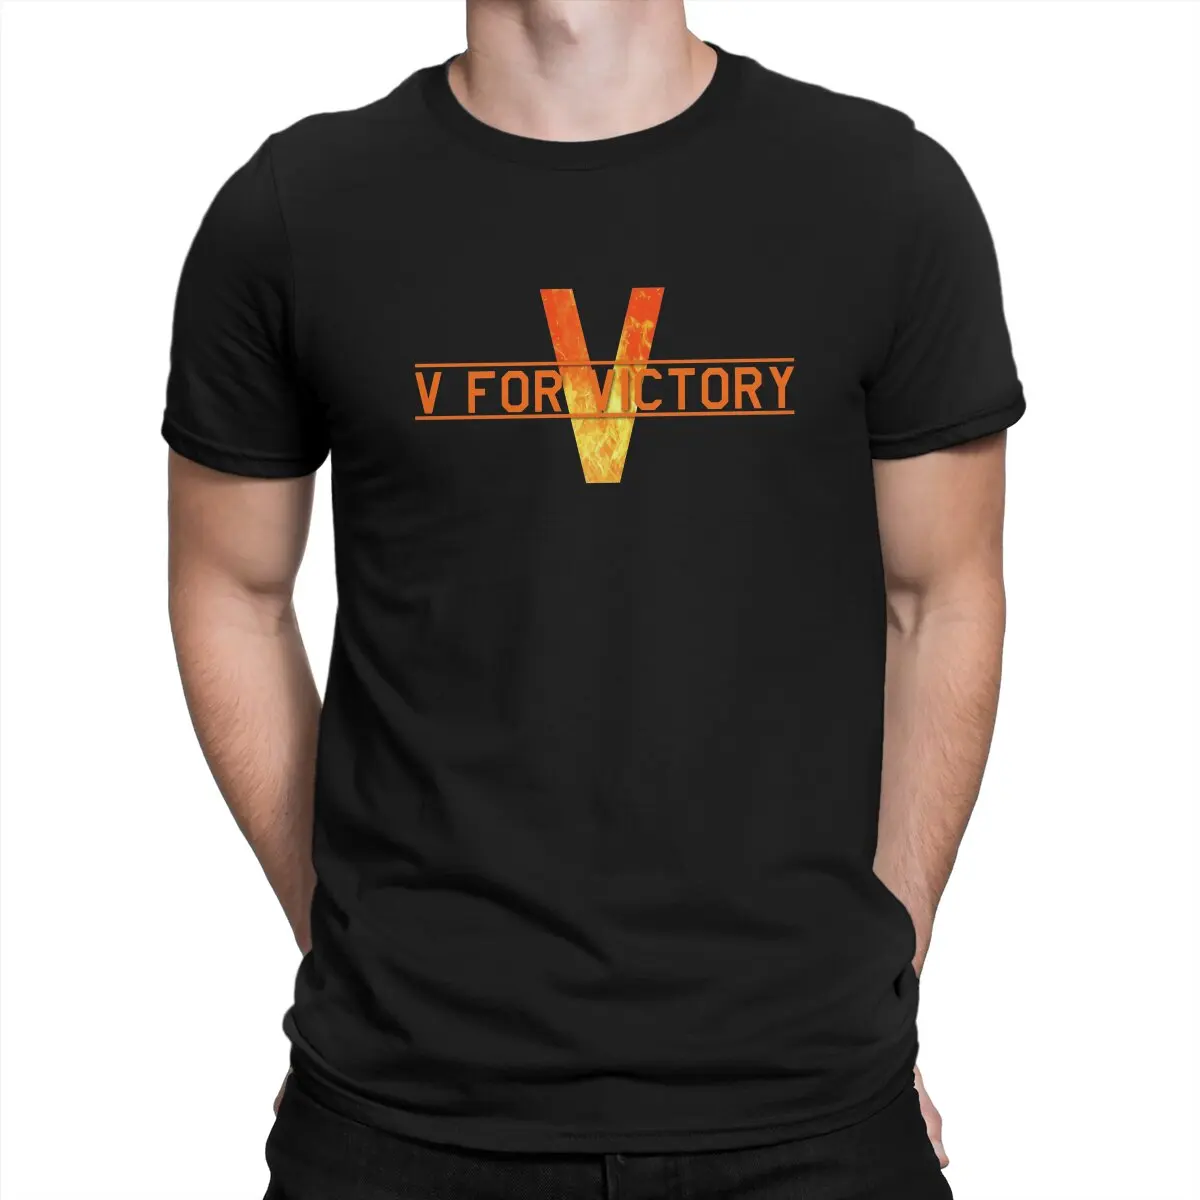 Видеоигра Battlefield V4 Victory - футболка Firestorm, мужские футболки в готическом стиле, летняя одежда, футболка с круглым вырезом в стиле харадзюку